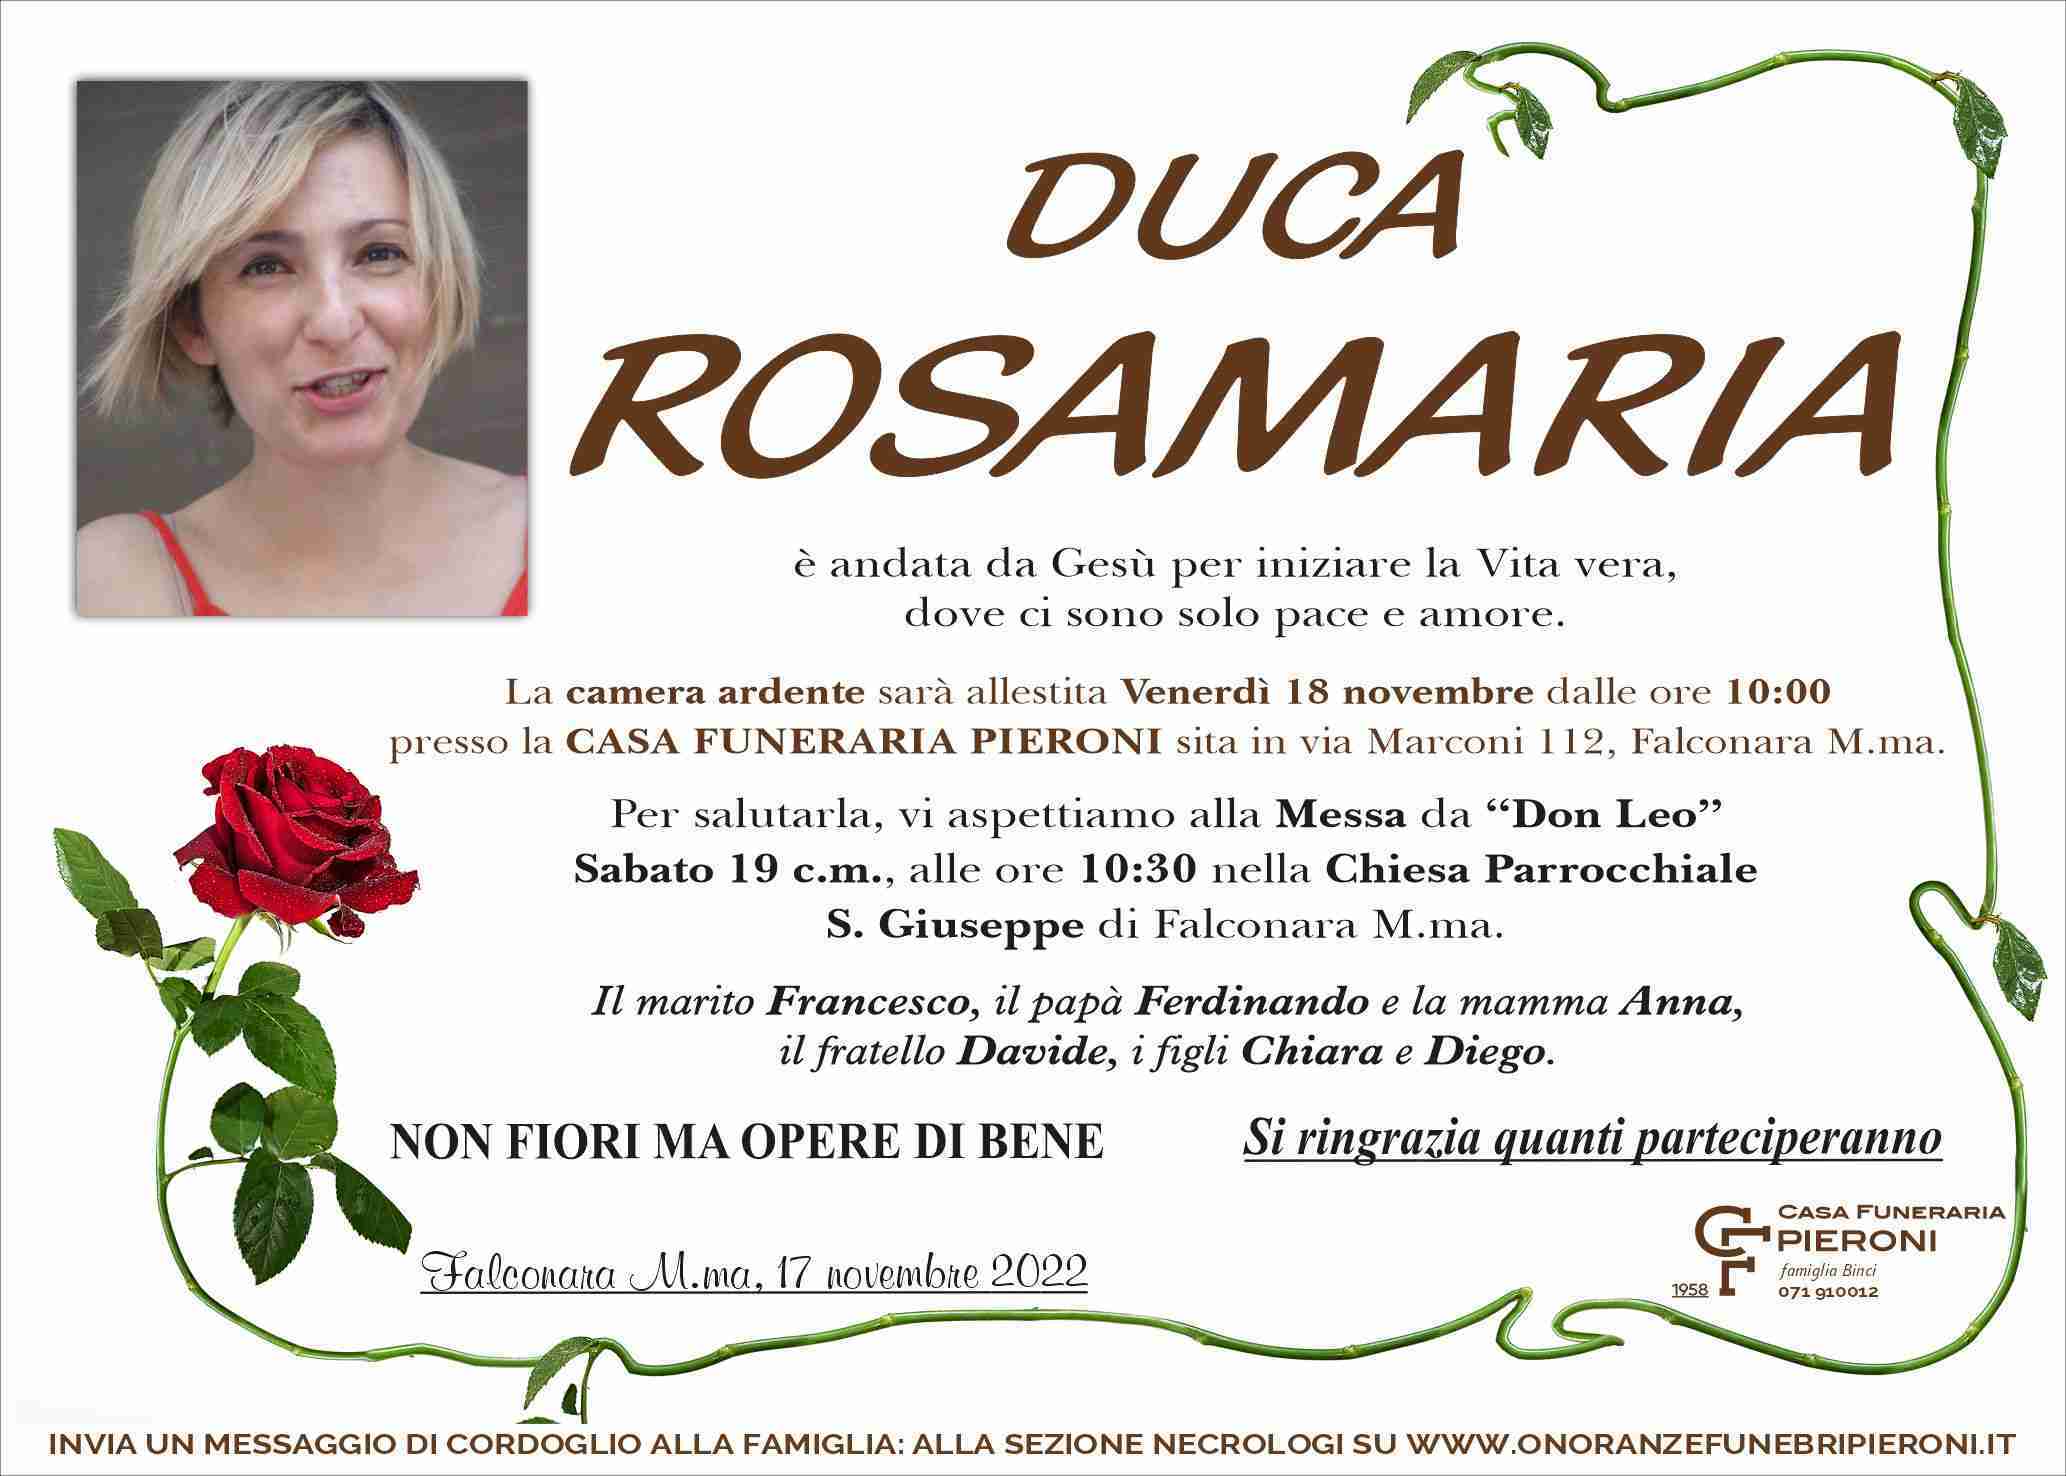 Rosamaria Duca